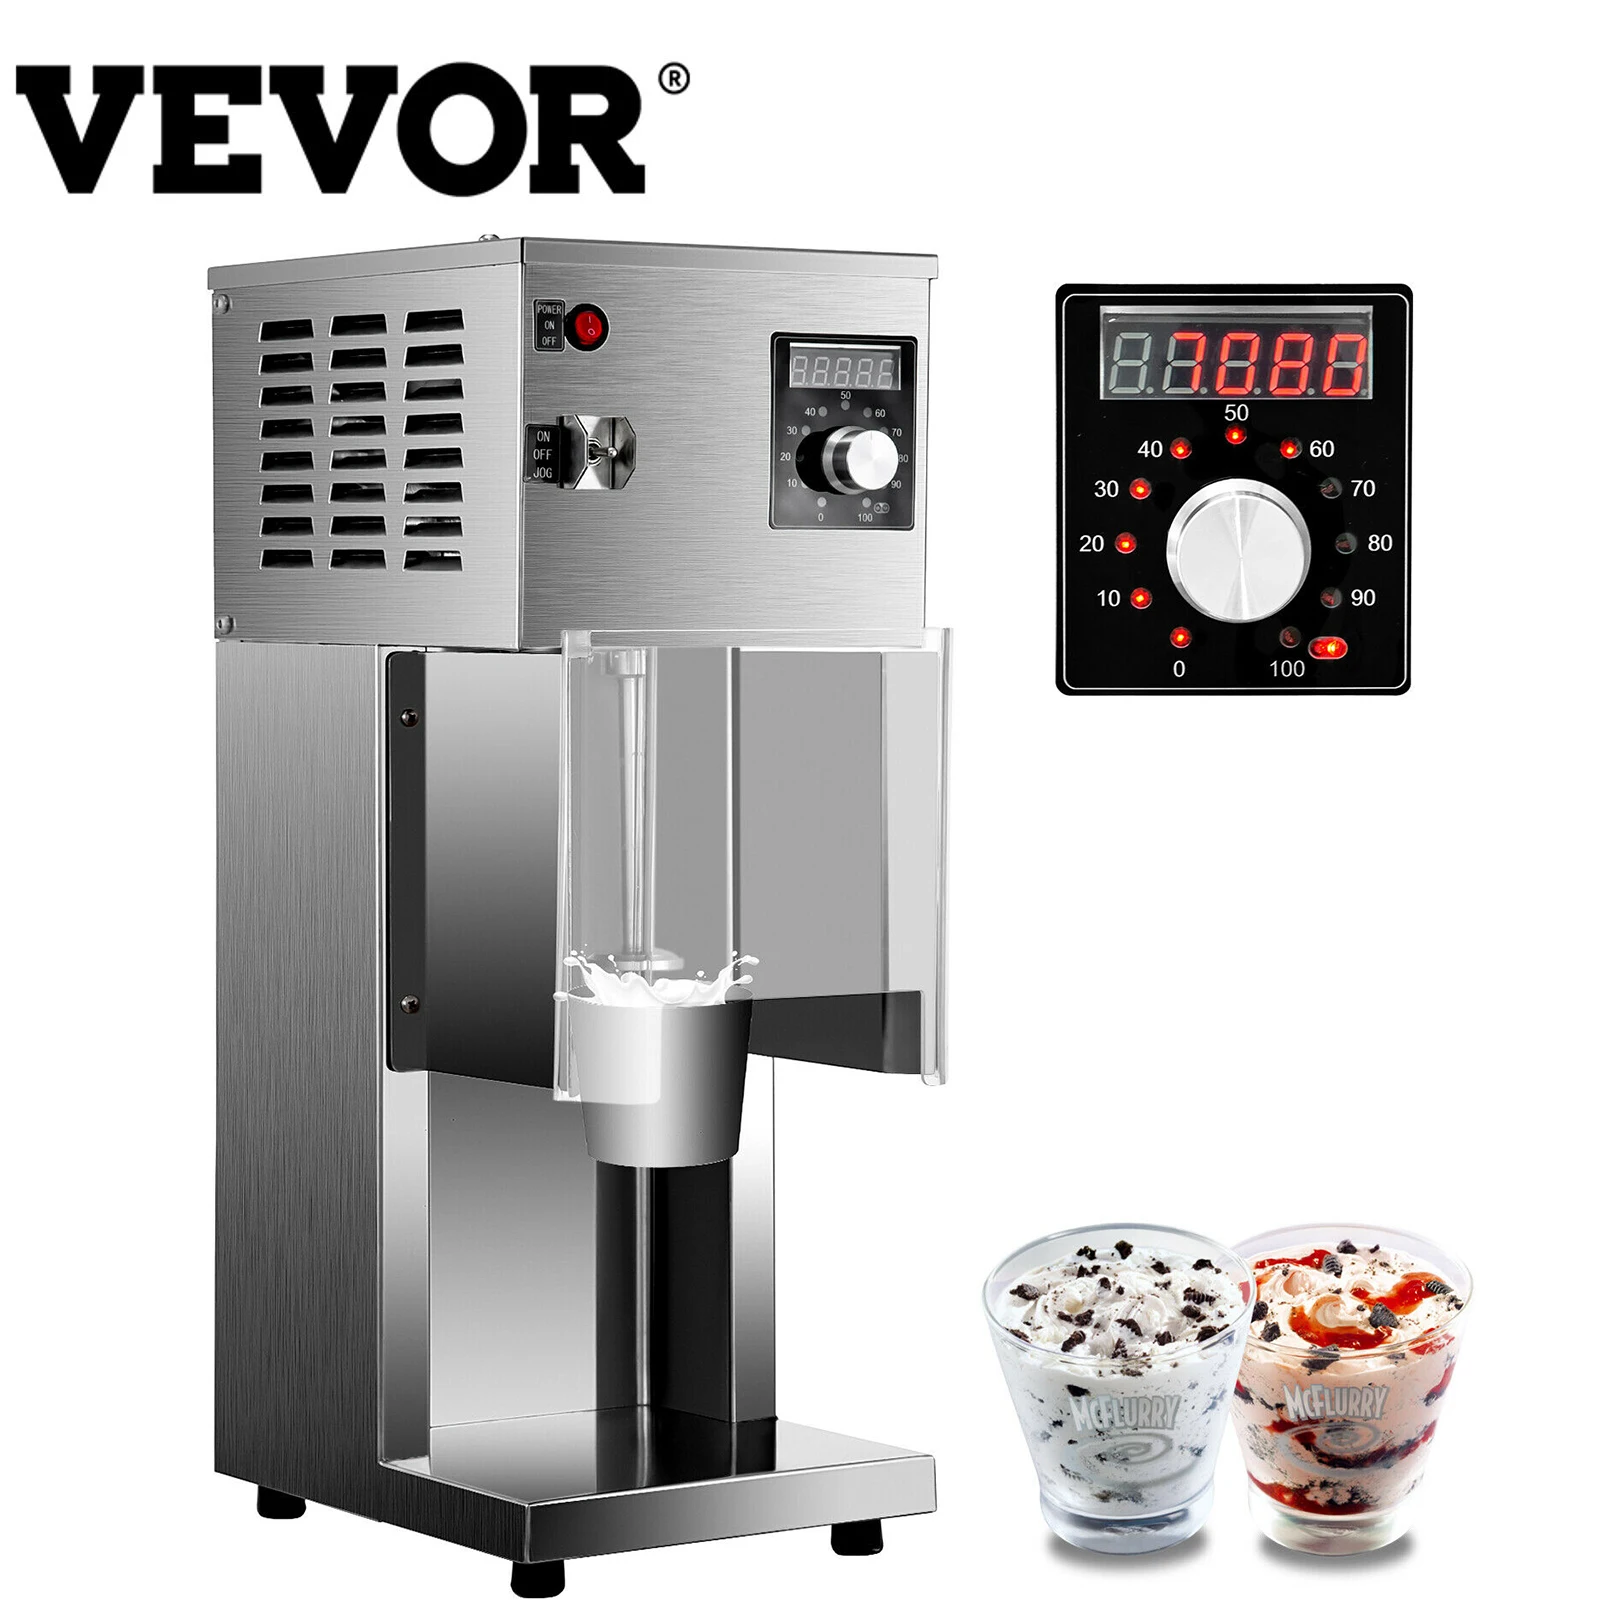 VEVOR Commercial Electric Auto Ice Cream Maker Slush Machine Shaker Blender Mixer with 10-Speed Levels for Yogurt Milk\n